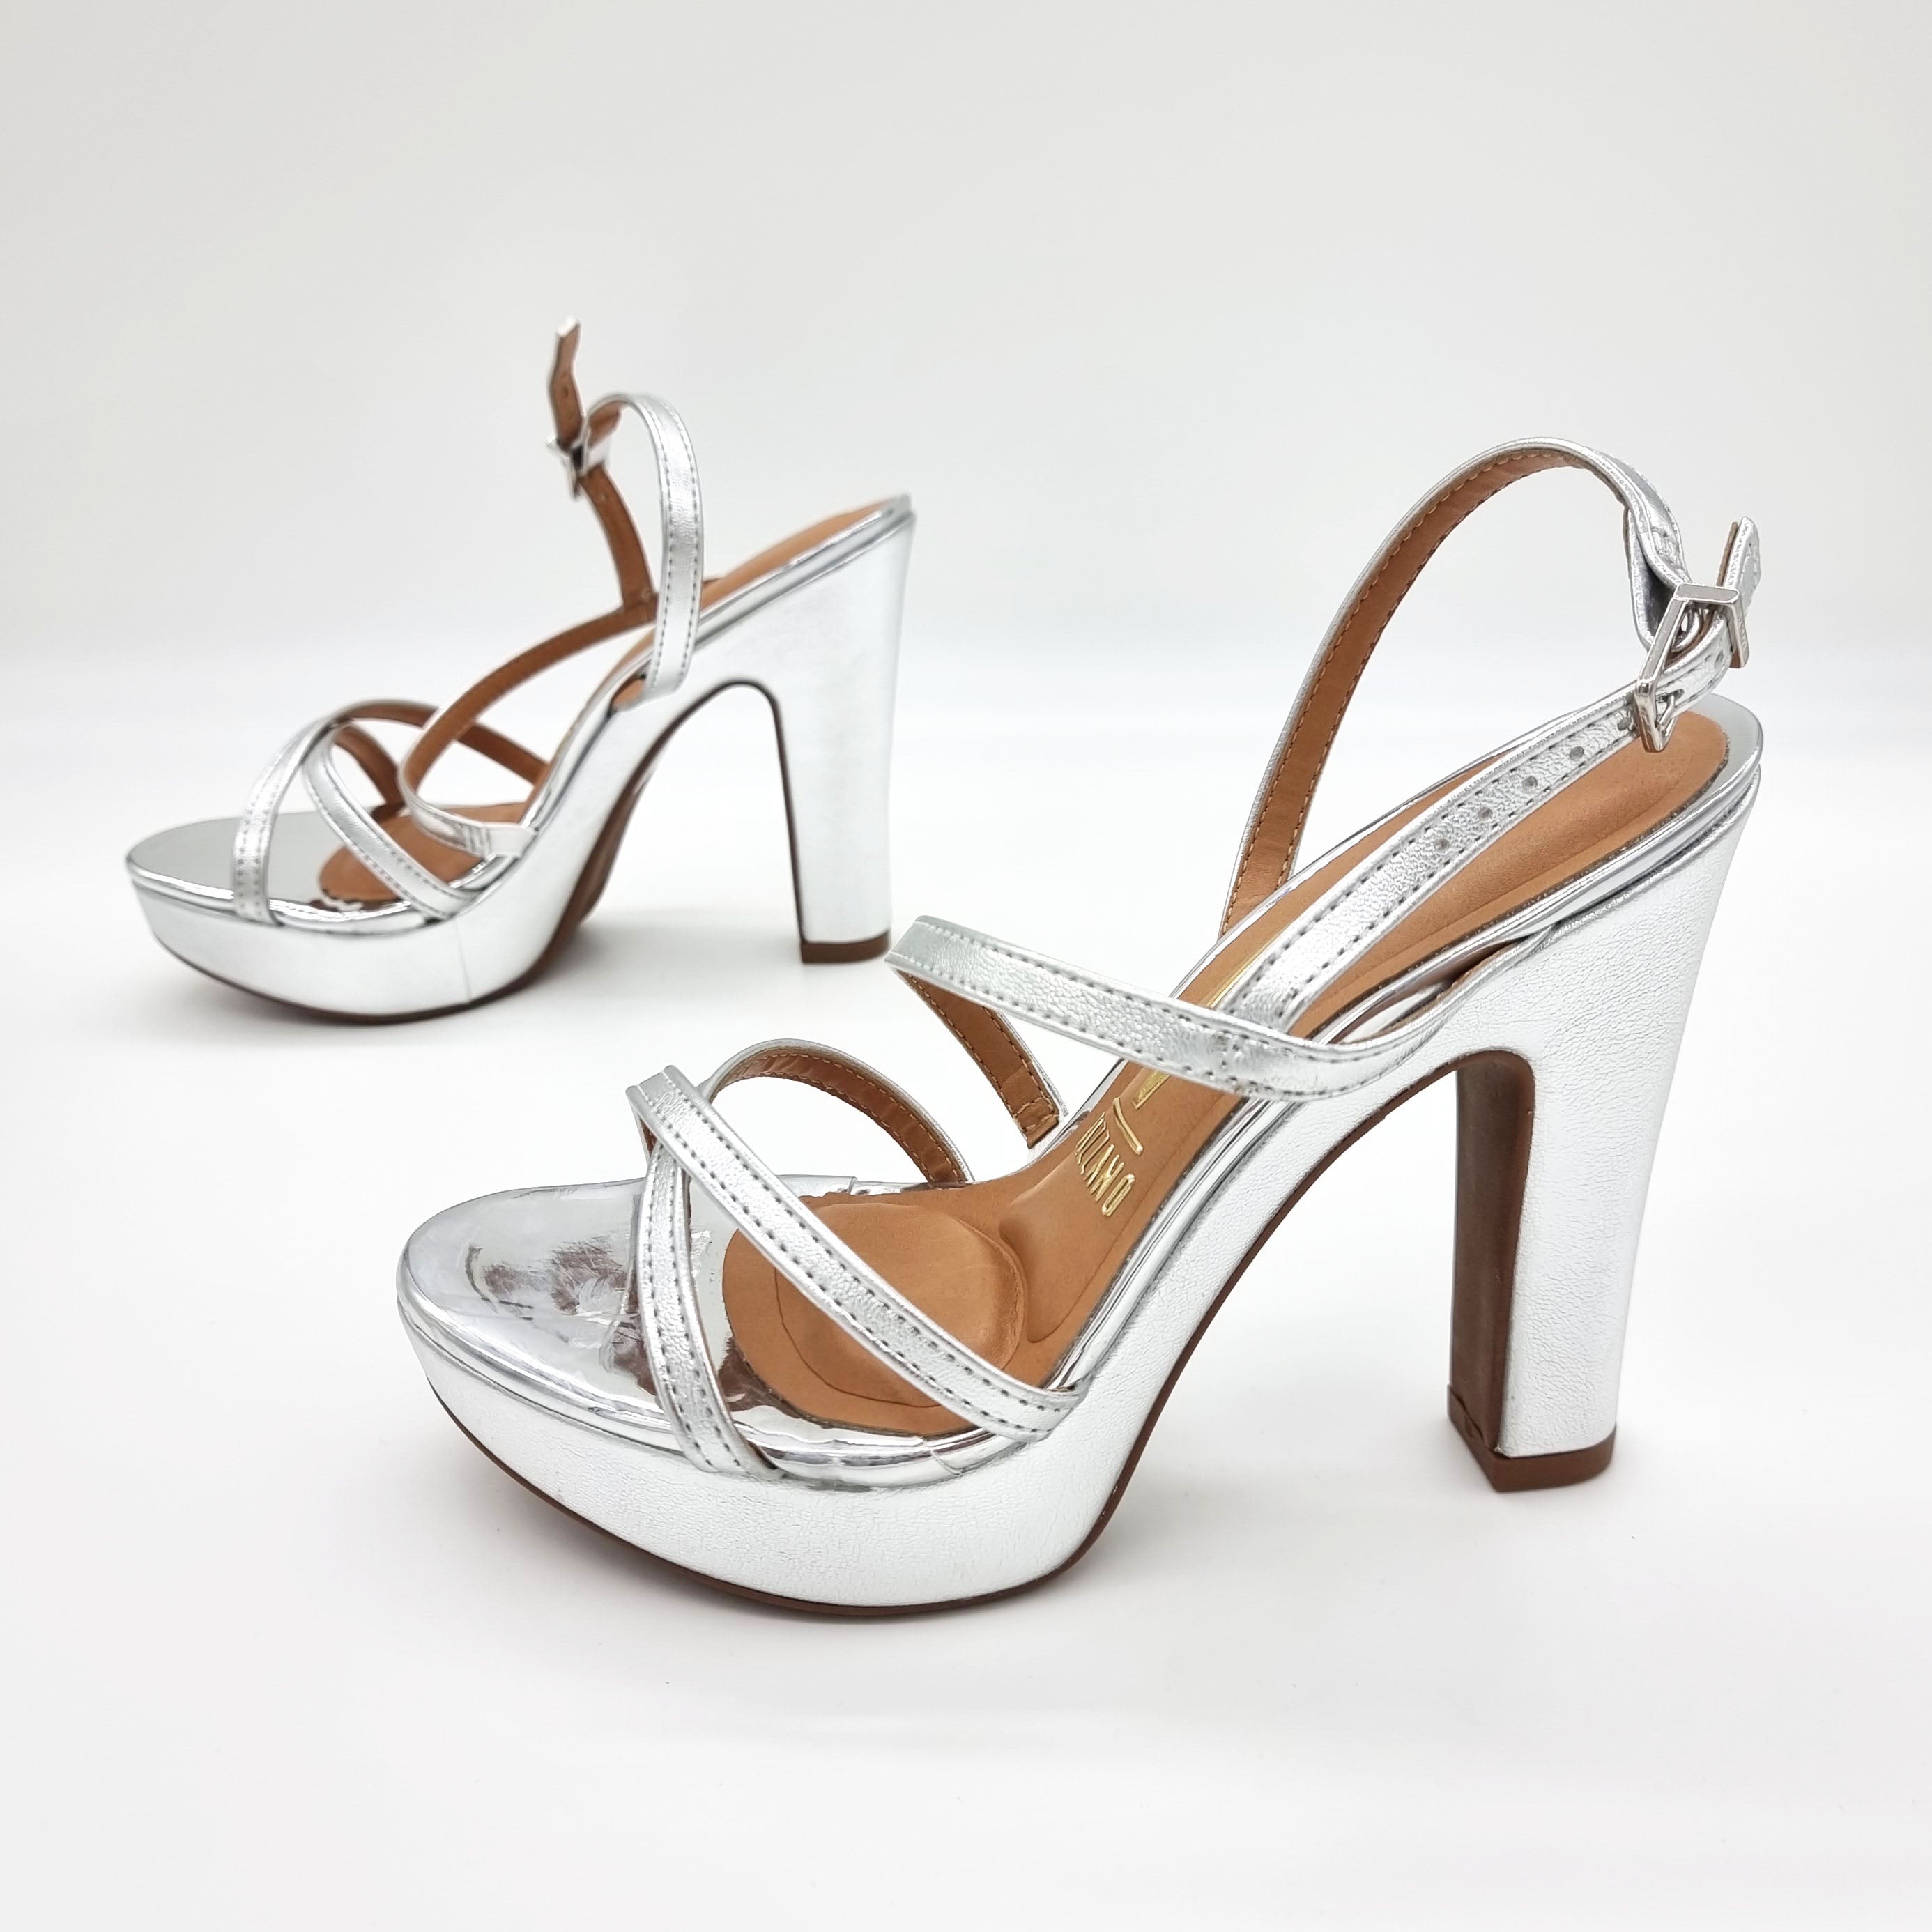 Vizzano 6292-260 High Heel Strappy Platform Sandal in Silver